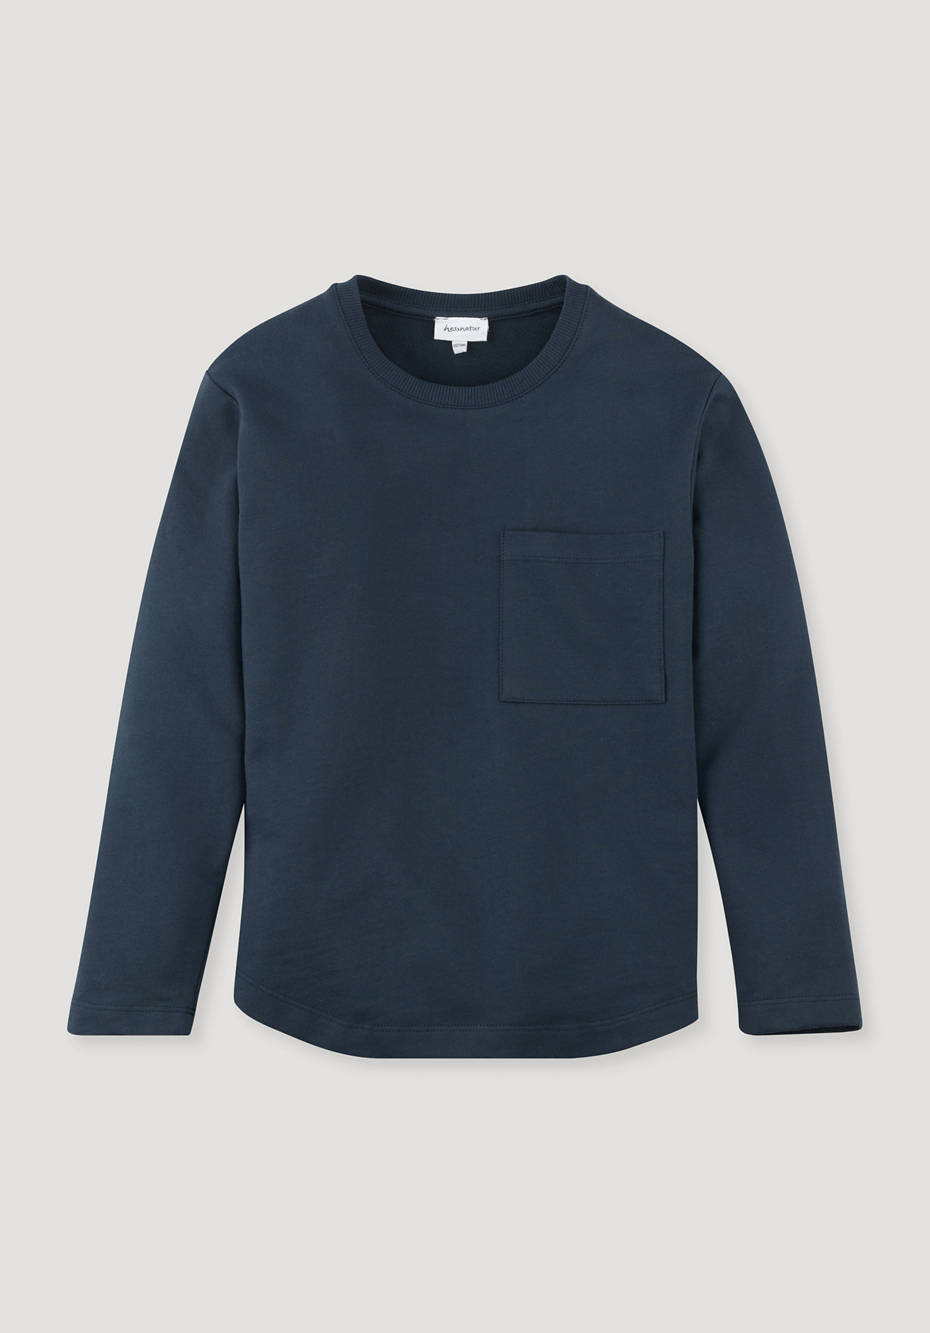 Organic cotton sweatshirt with kapok